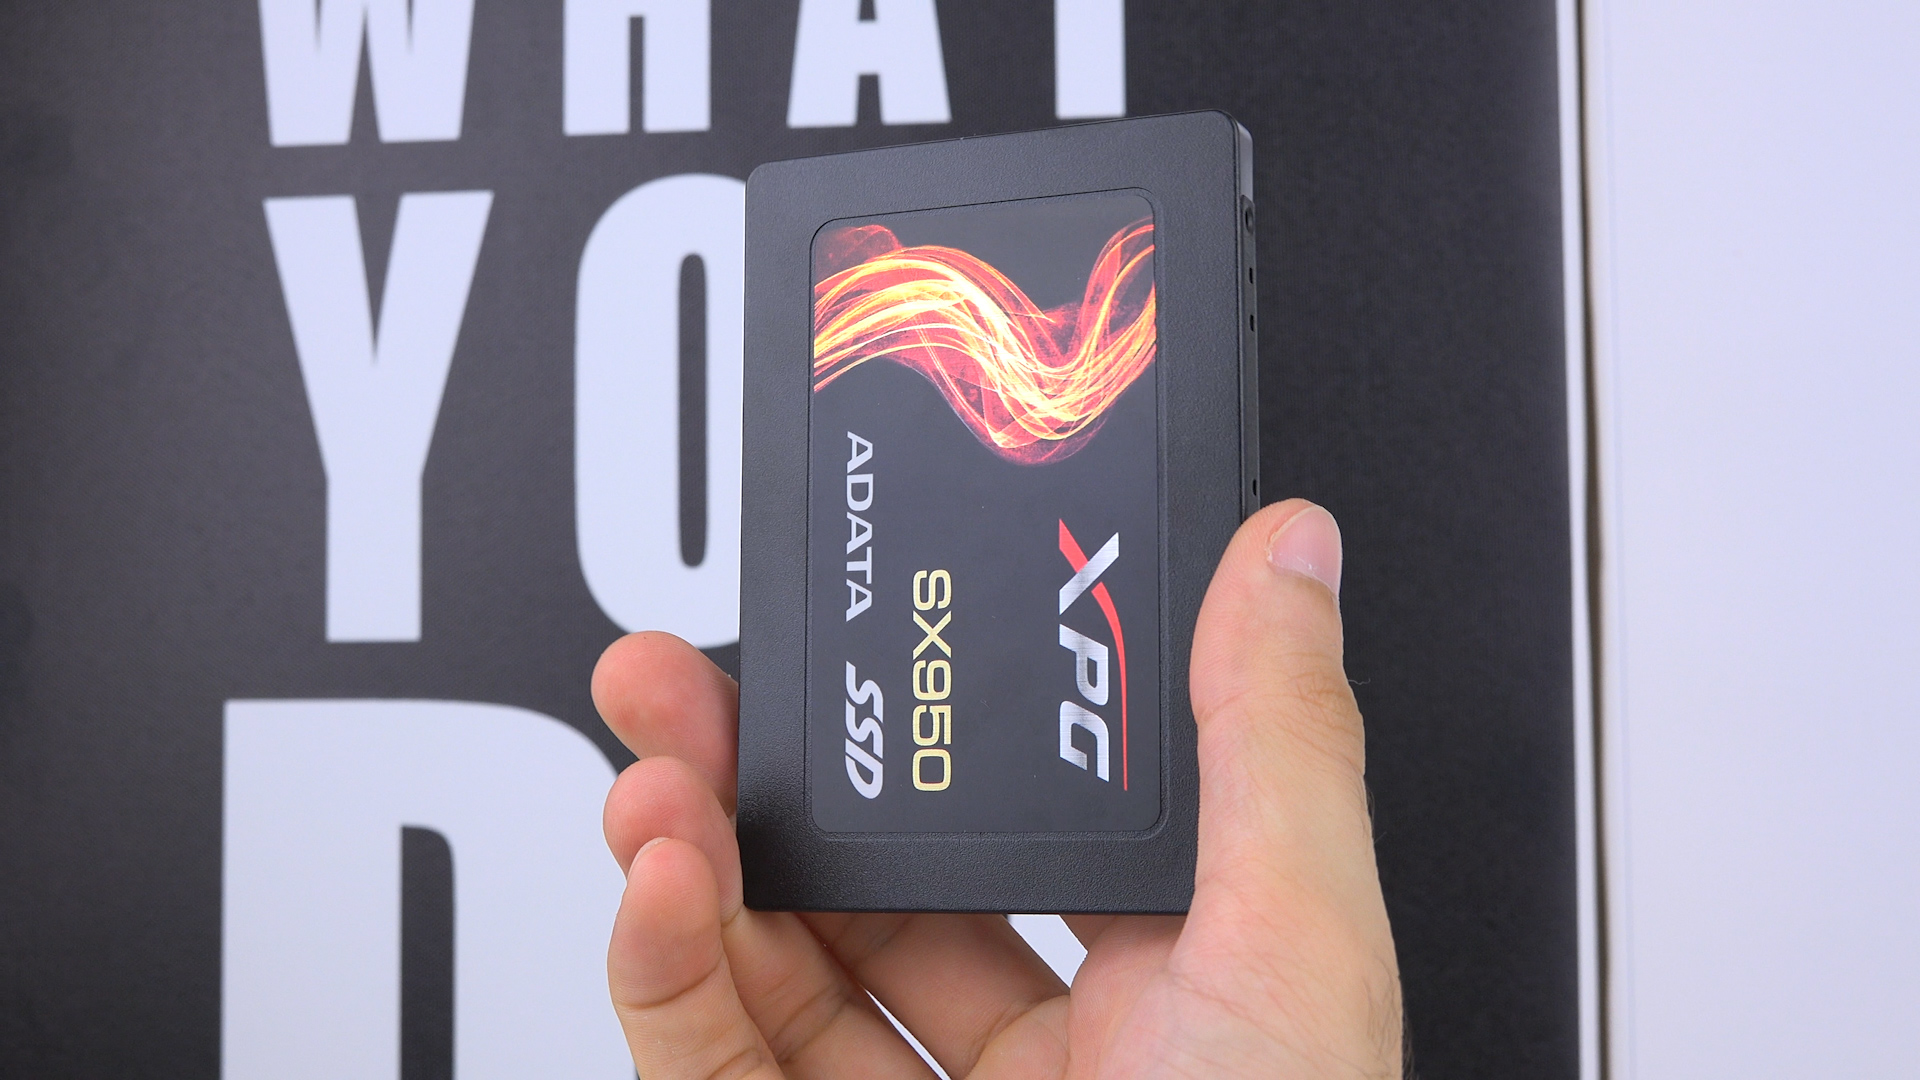 ADATA XPG SX950 SSD incelemesi '3D NAND MLC'li, uzun ömürlü SSD'